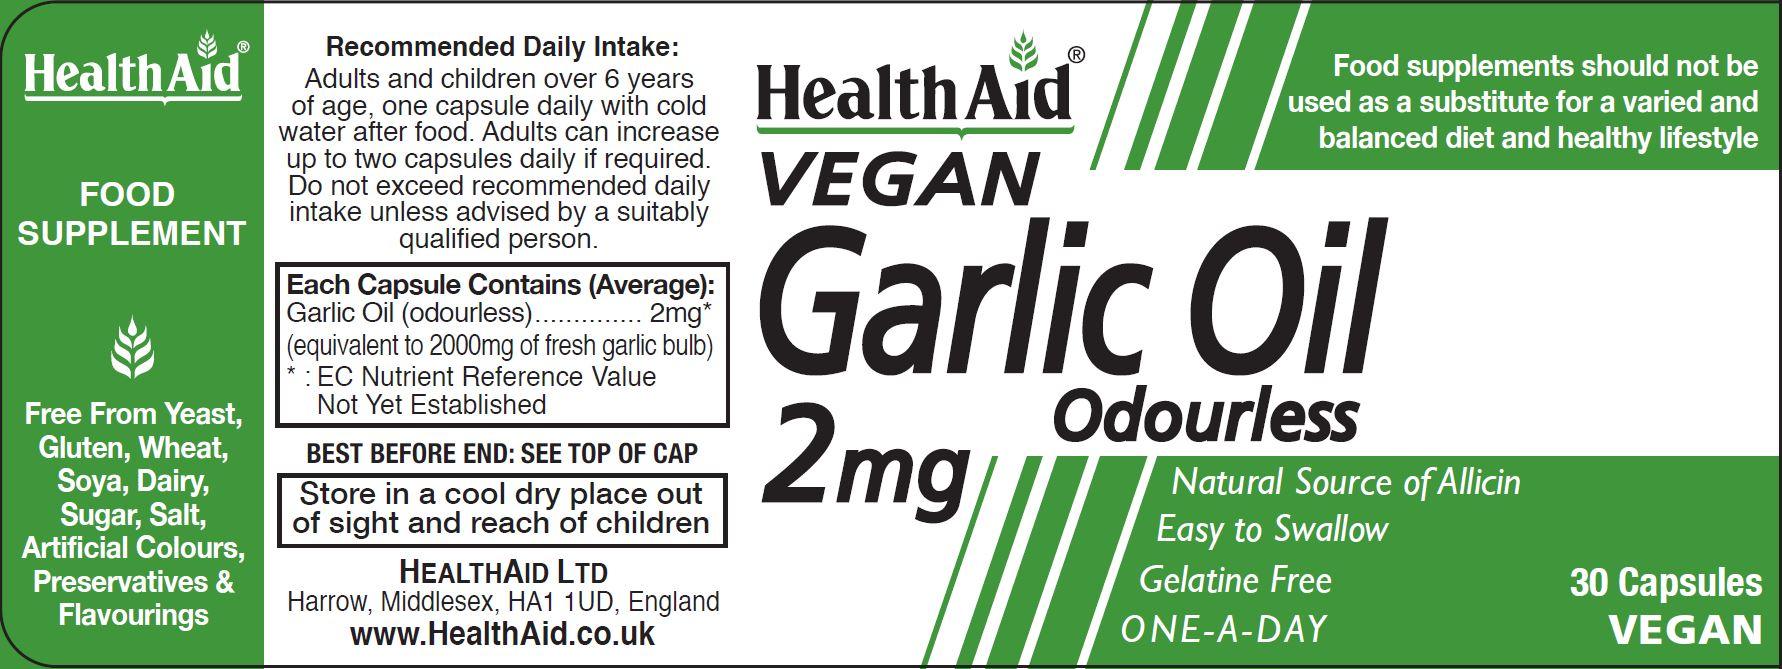 Health Aid Vegan Garlic Oil 2mg Odourless 30's - Approved Vitamins